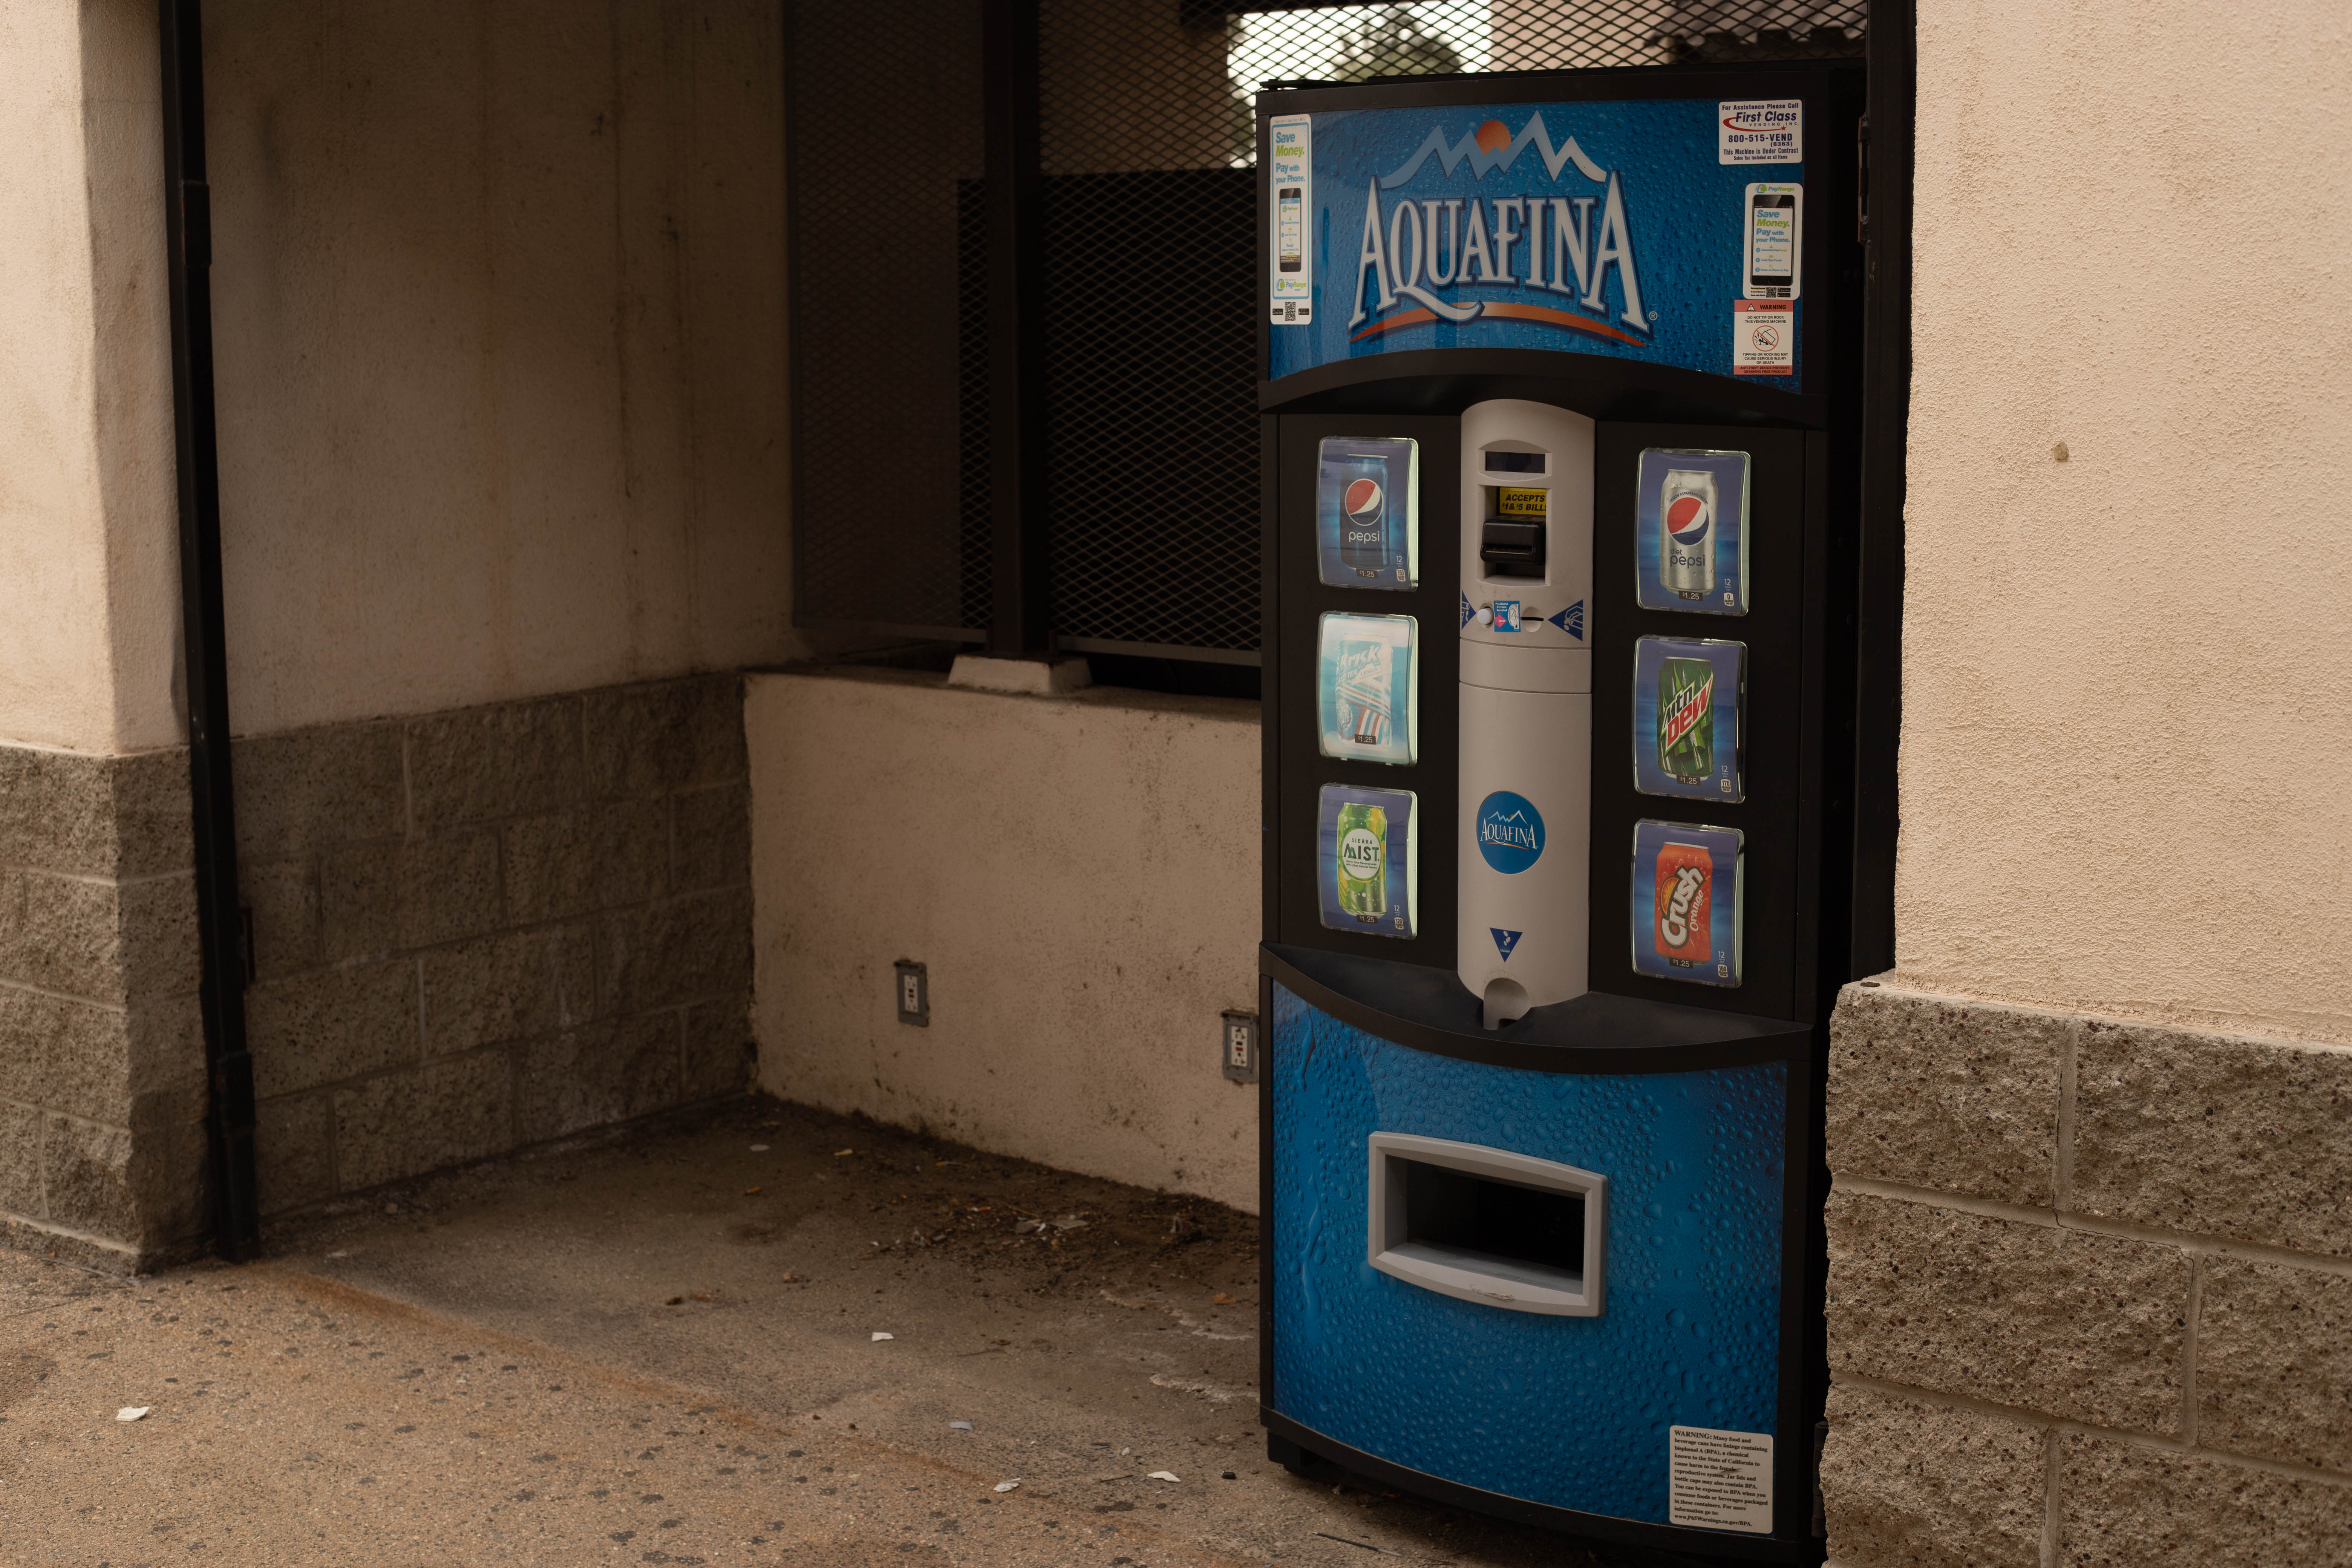 BRIEF: Vending machines vandalized